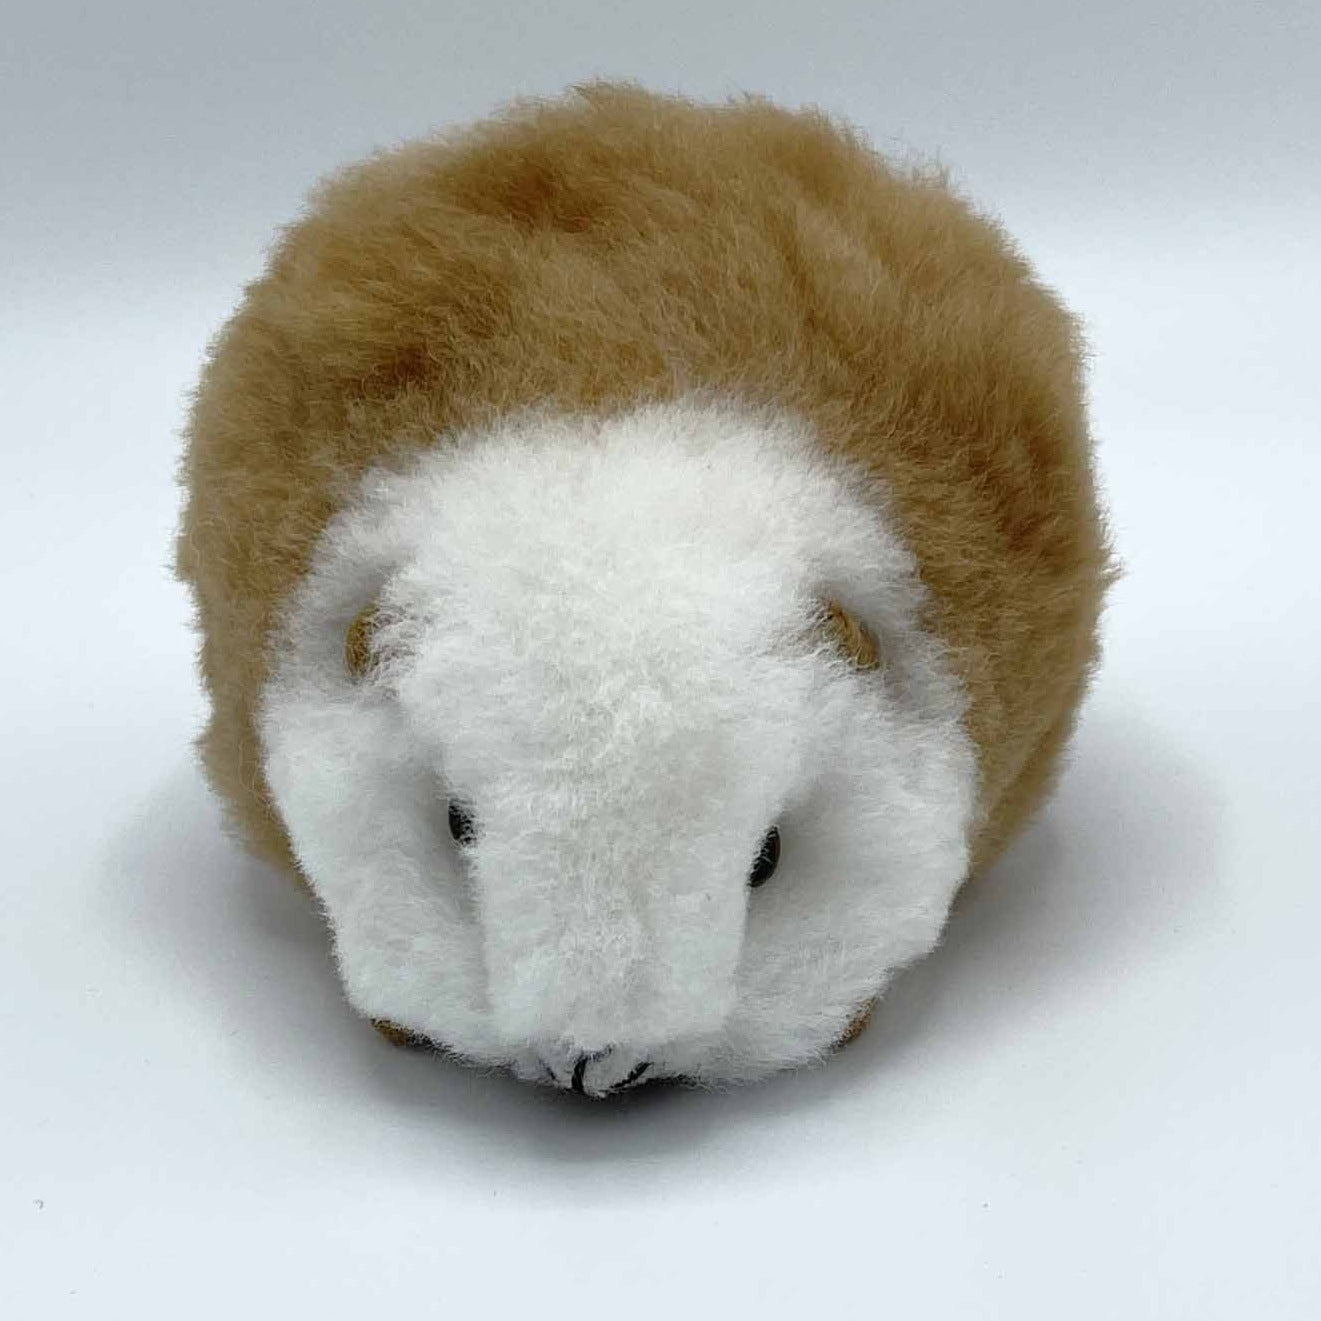 Stuffed Guinea Pig | Handmade with 100% Alpaca Fur